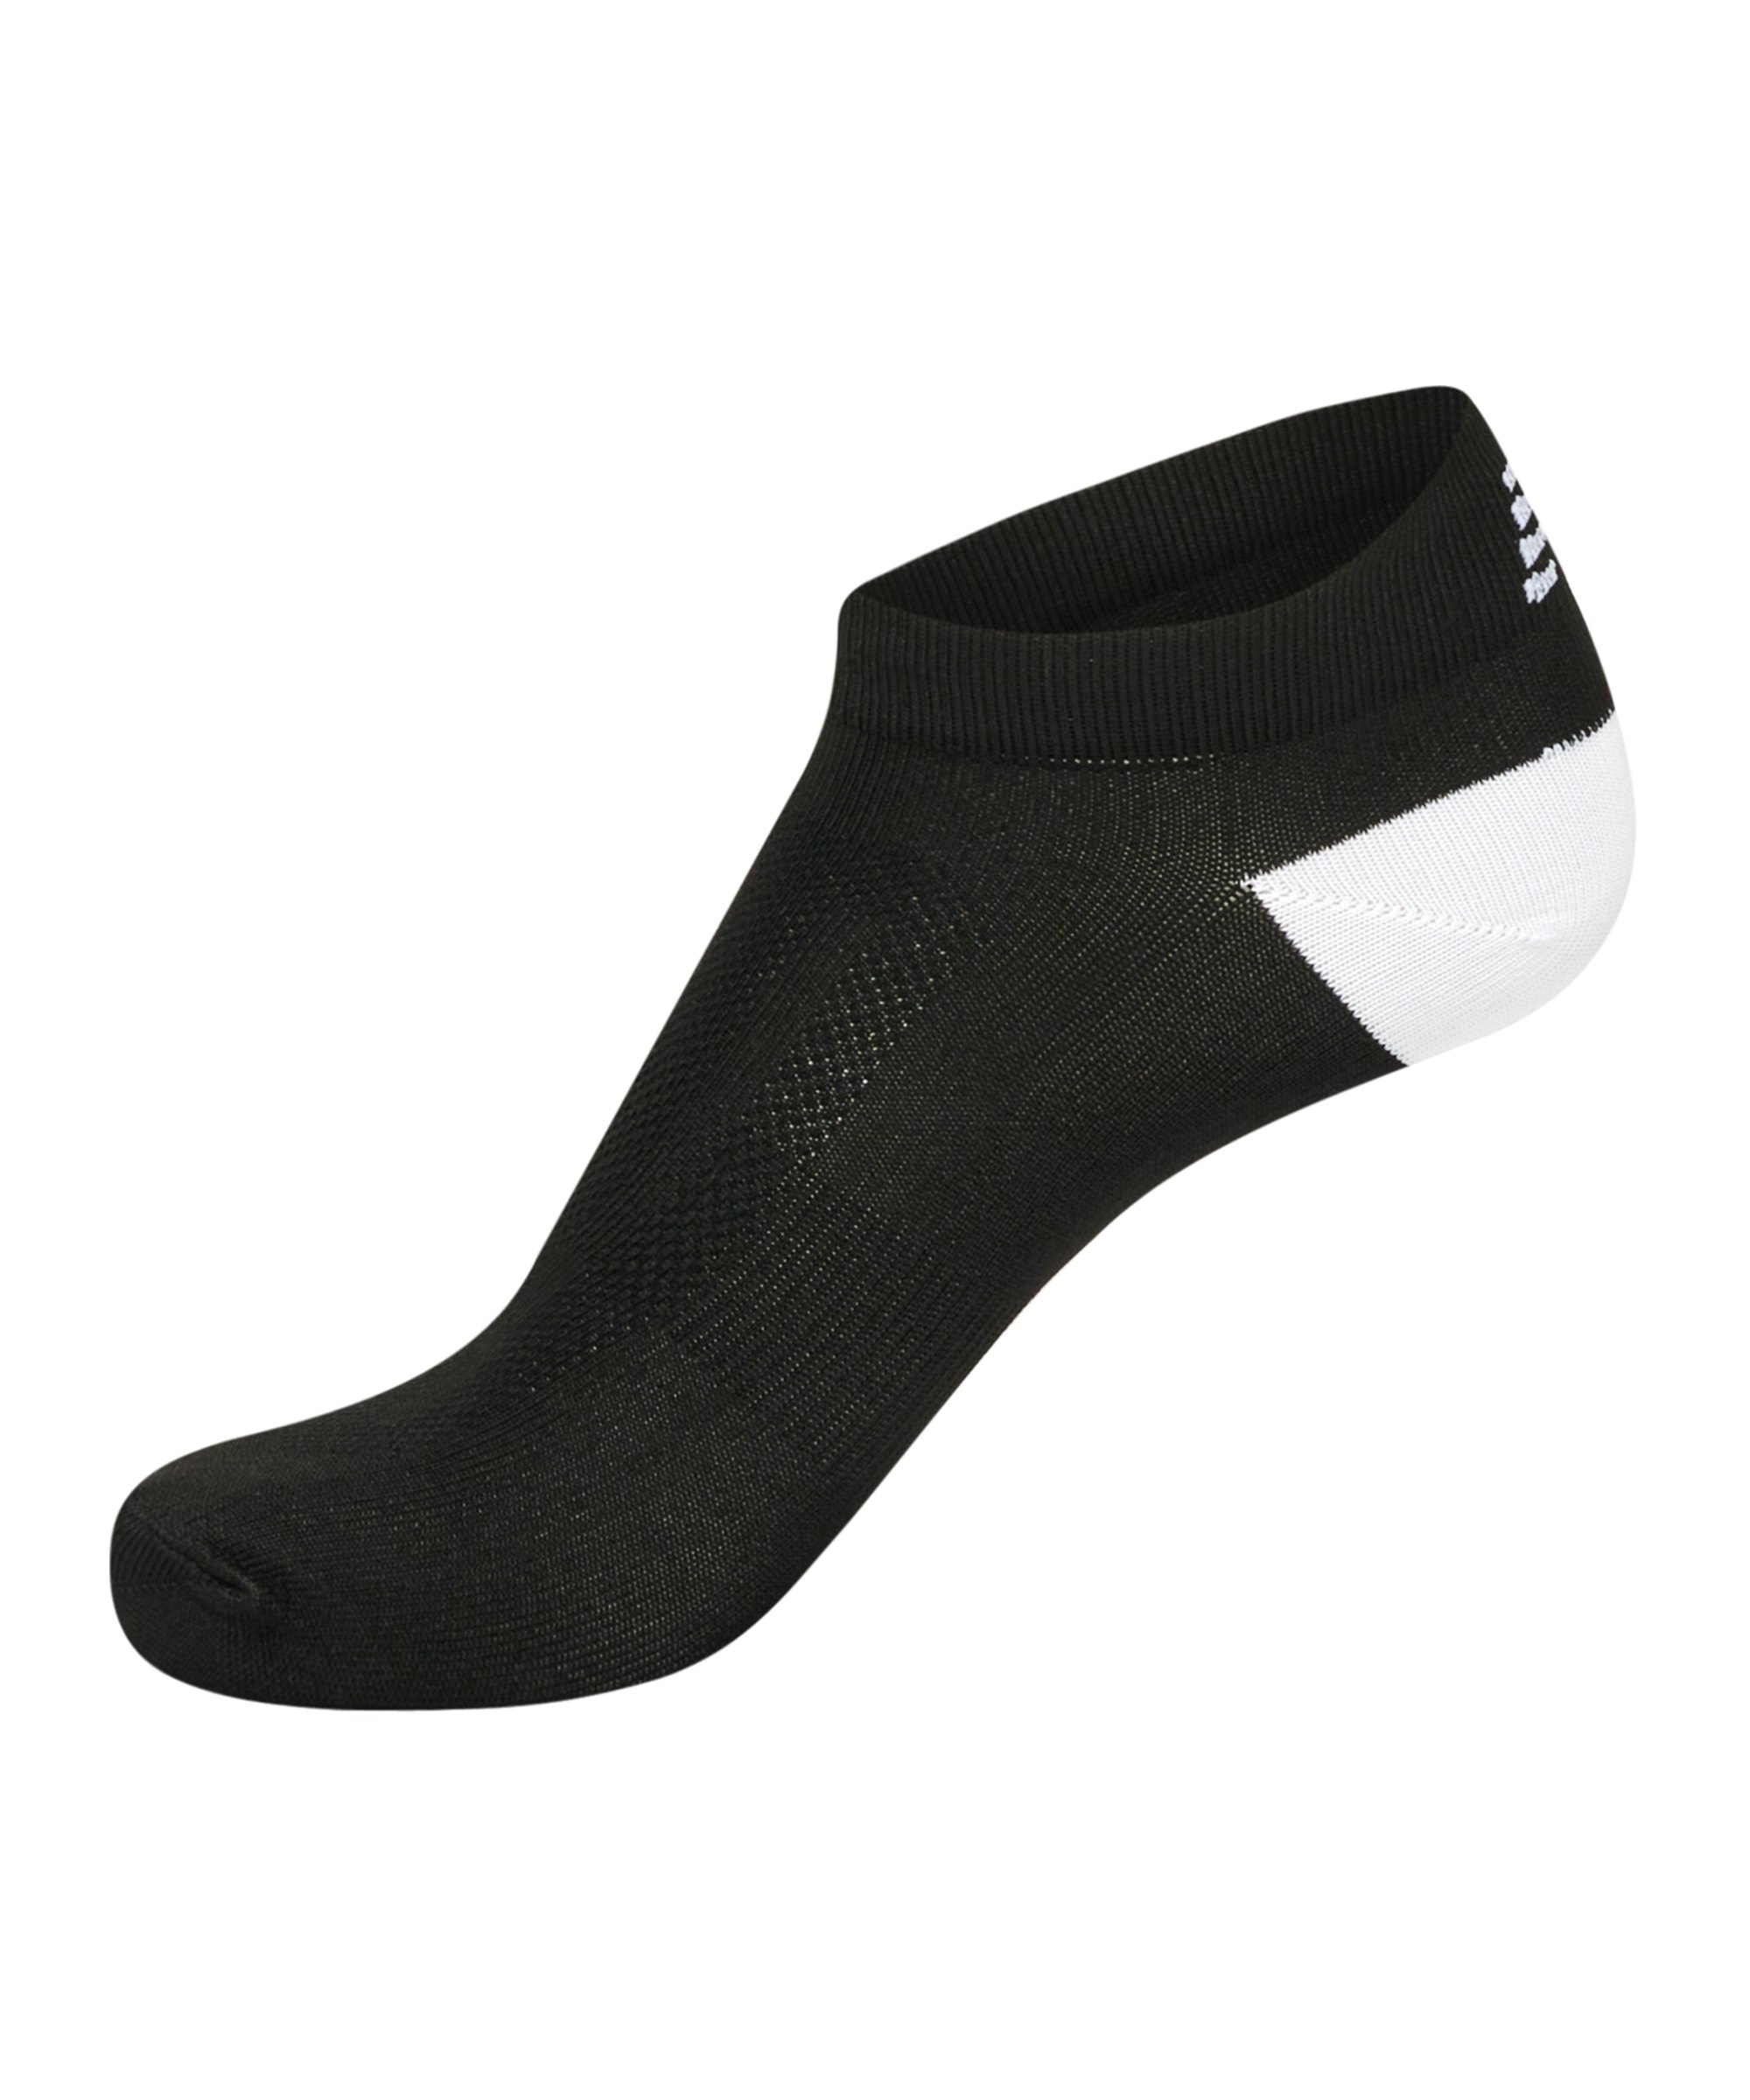 Newline Core Sneaker Socken Running Schwarz F2001 - schwarz